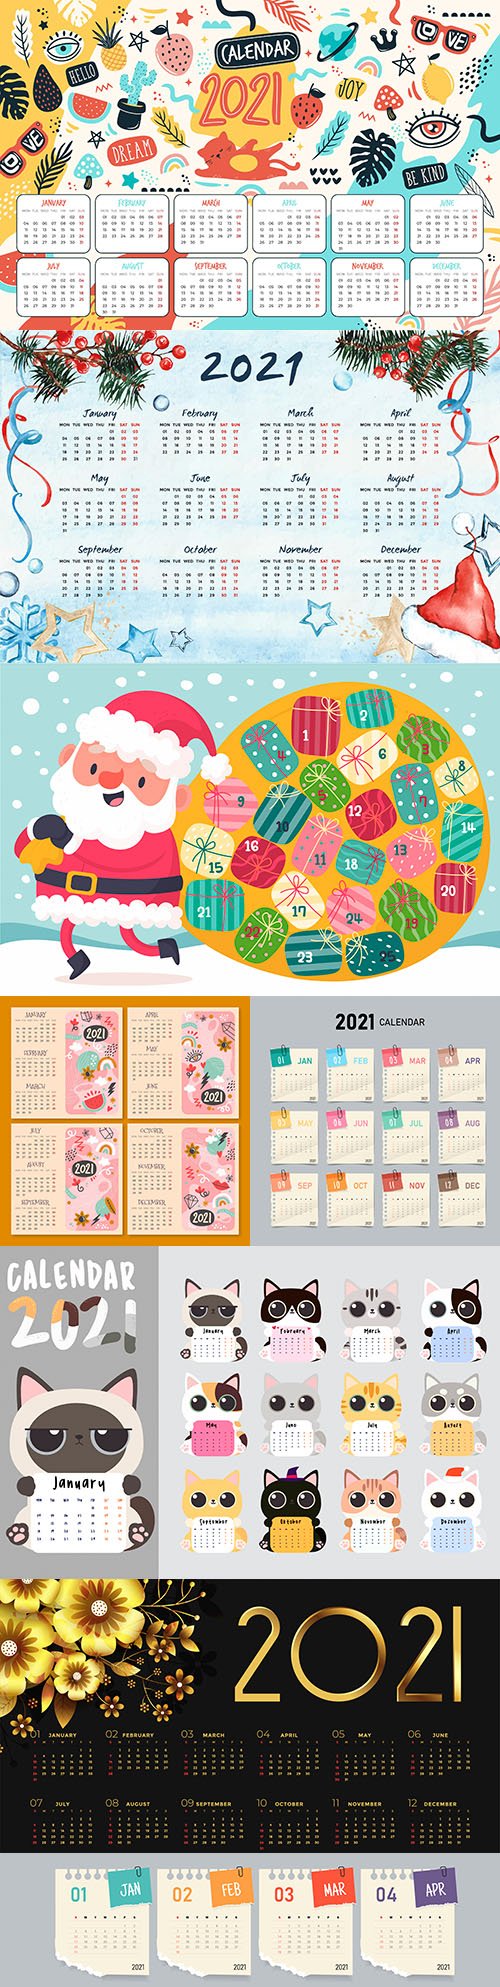 Painted calendar New Year 2021 decorative design